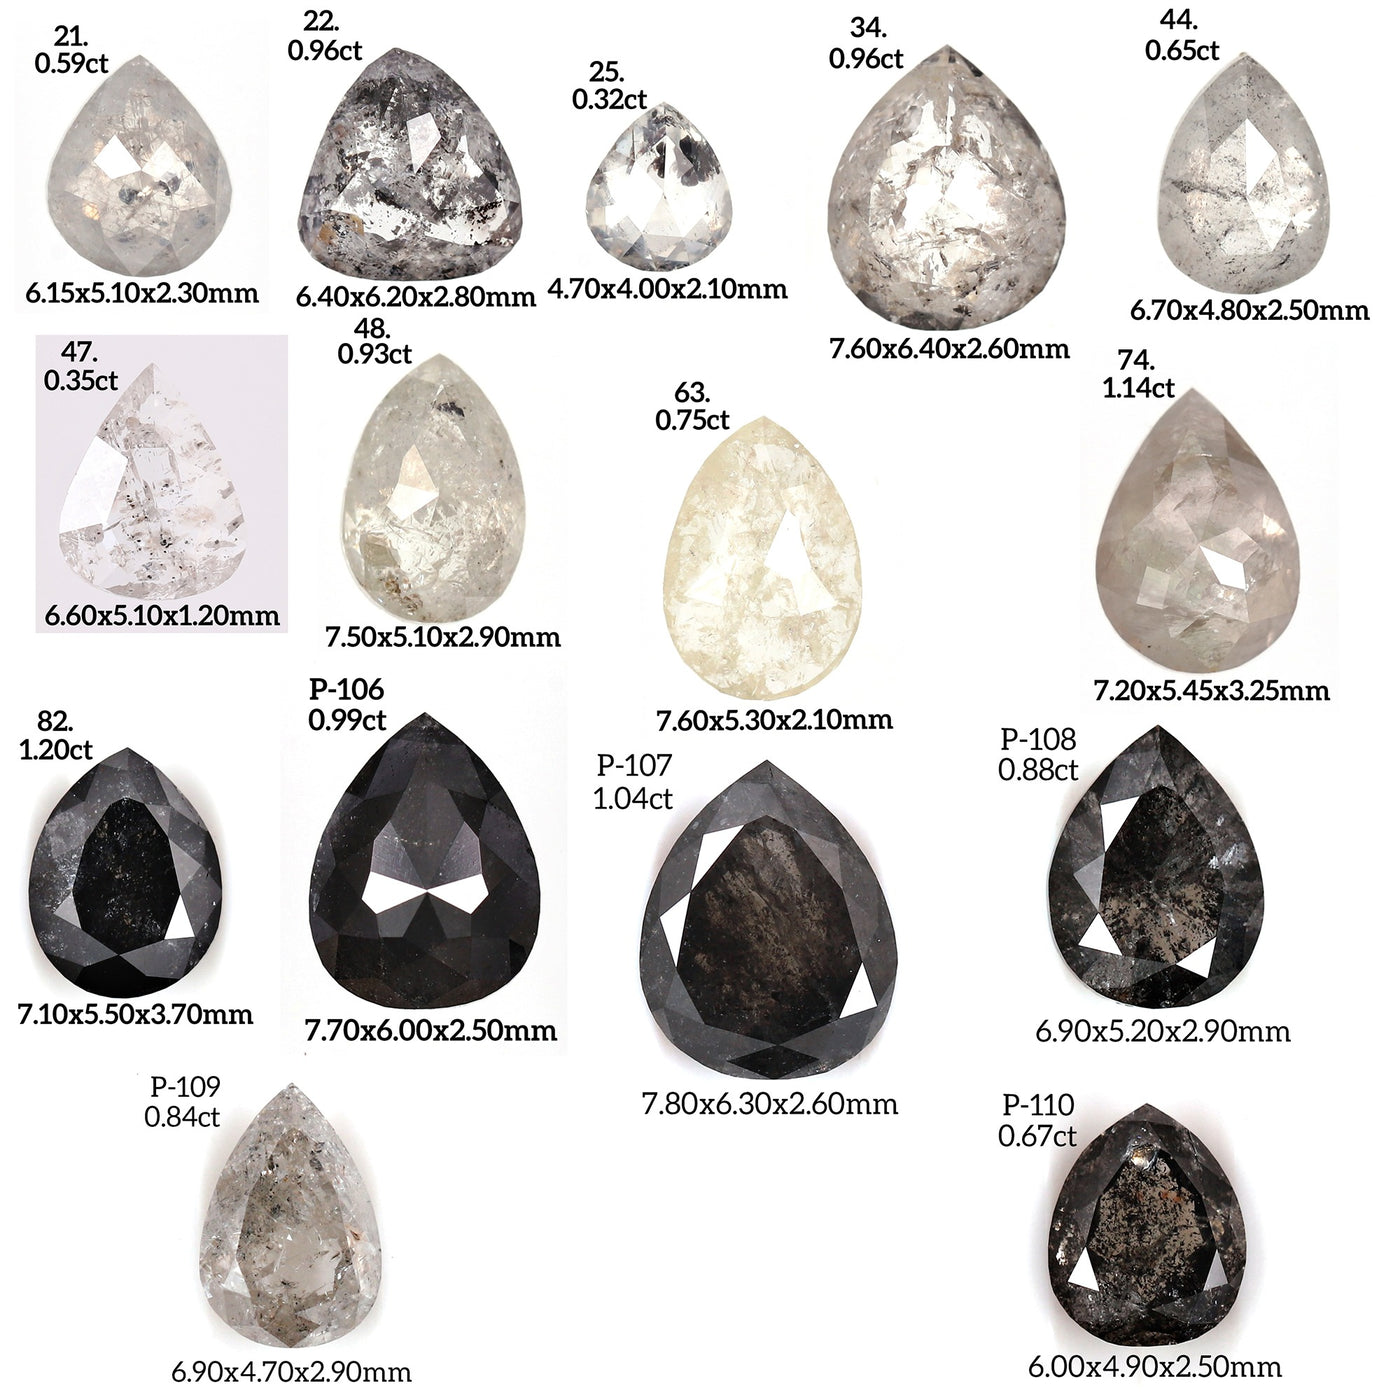 Salt and pepper diamond ring | Pear diamond ring | 14K Solid Rose gold Ring